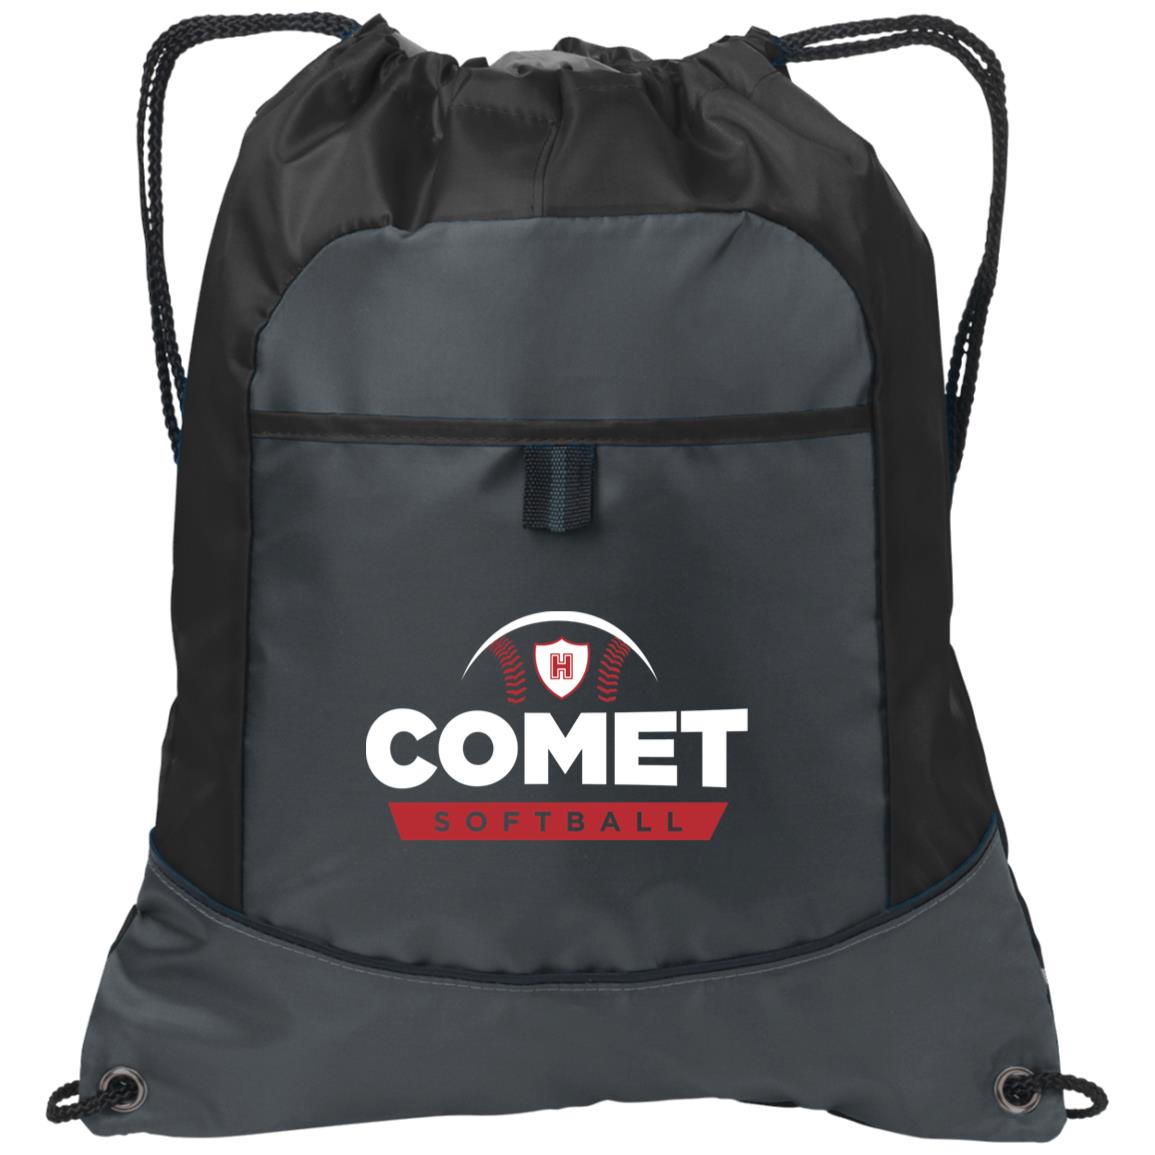 Comet Softball - Pocket Cinch Pack